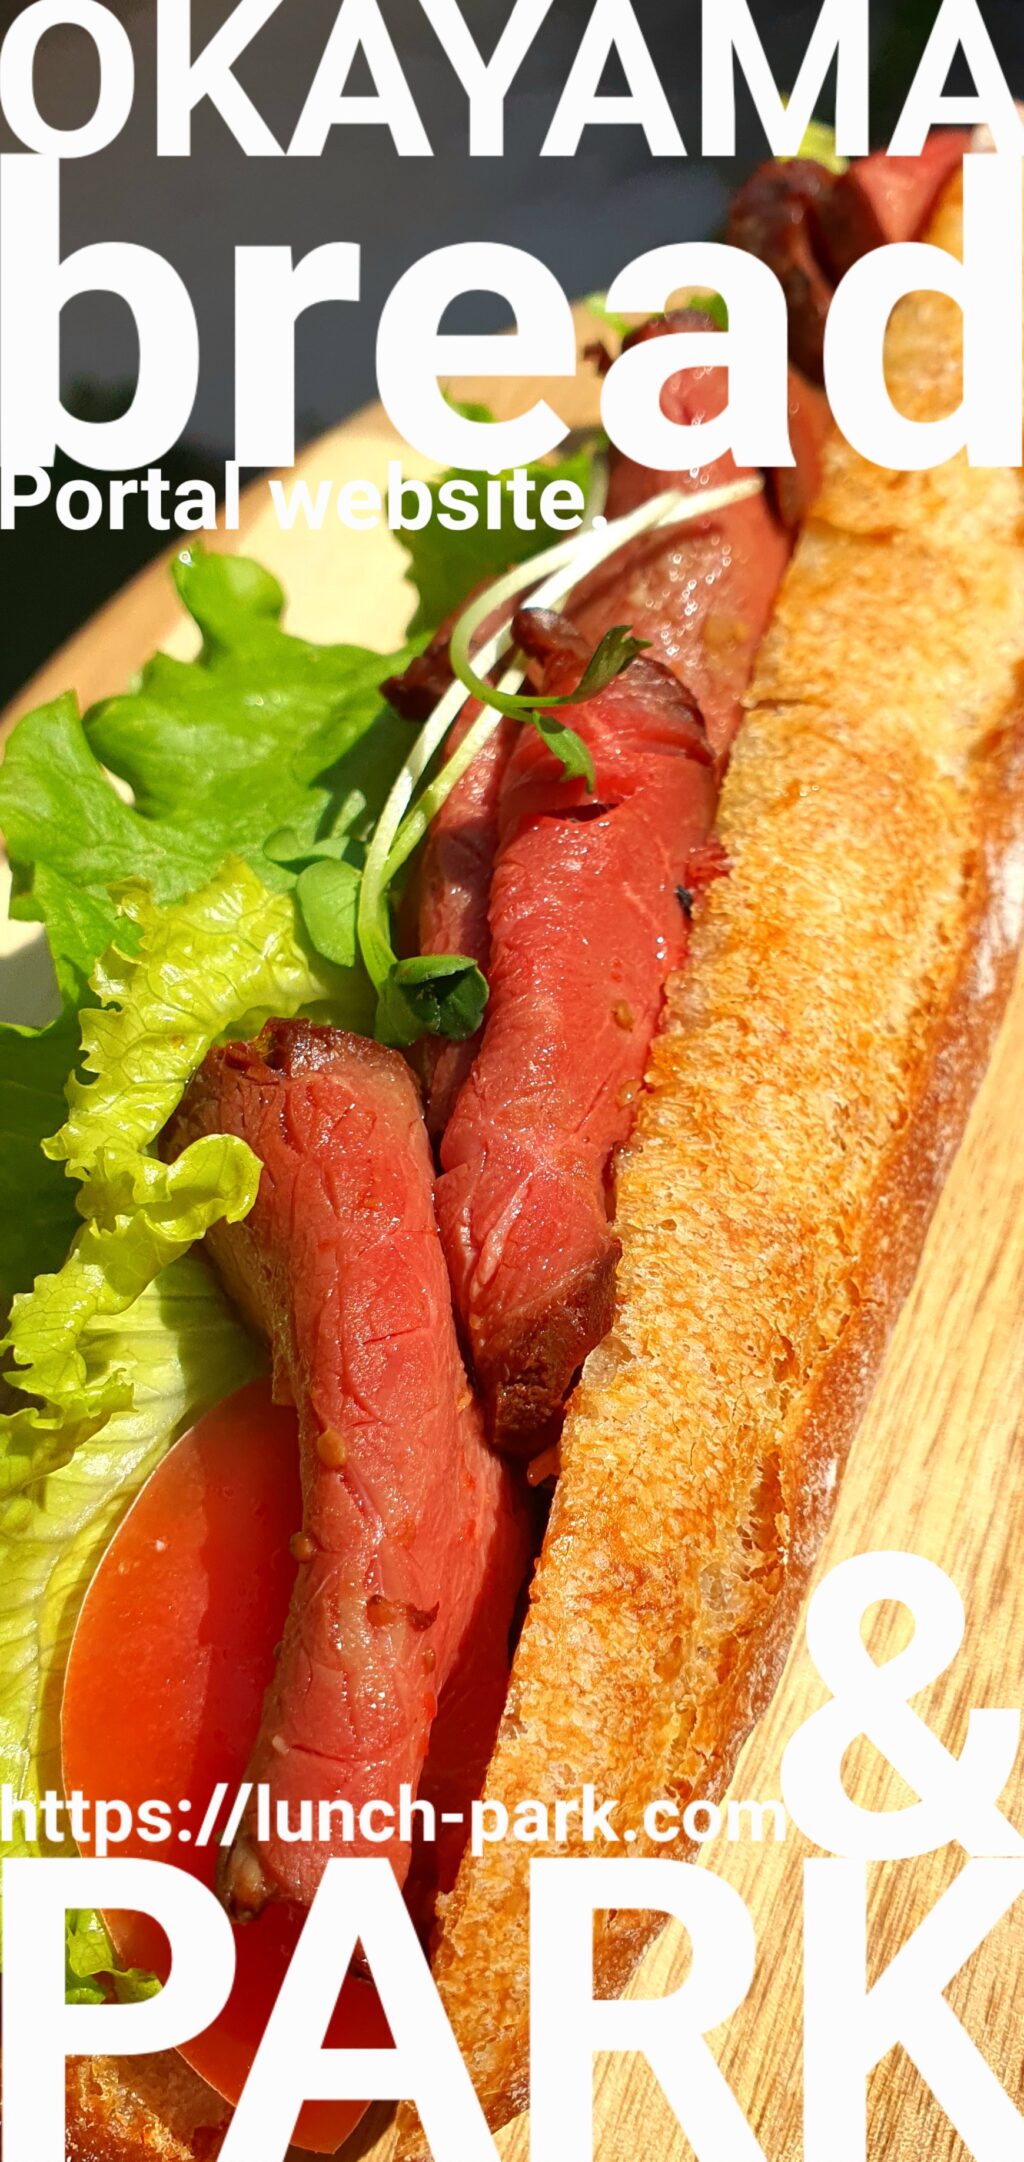 Lunch Park -OKAYAMA bread&PARK portal web site.-